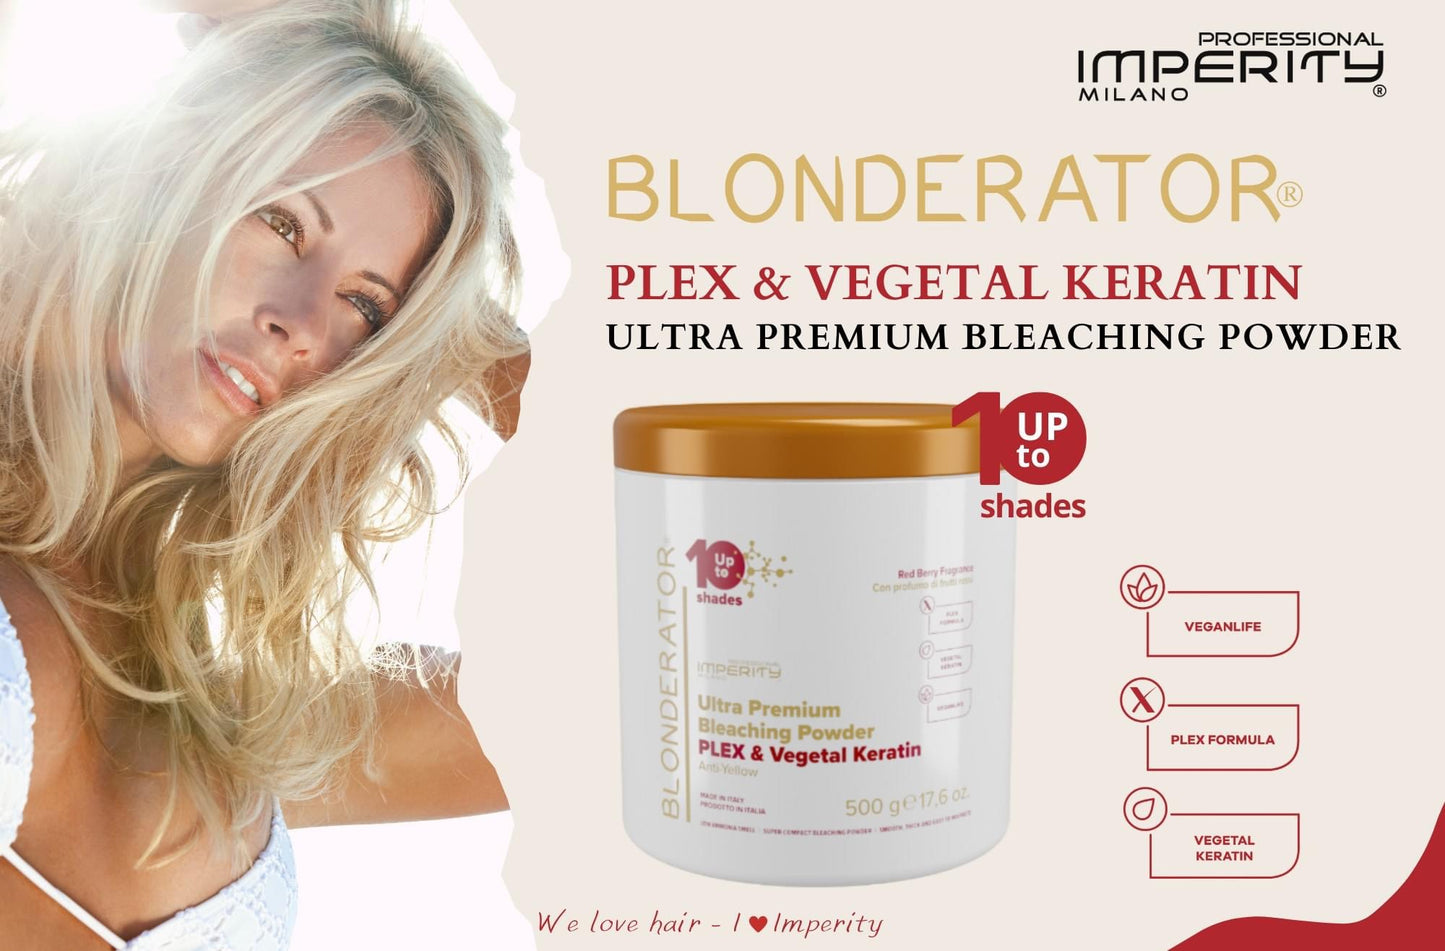 Ultra premium bleach powder PLEX Vegetal Keratin 500g